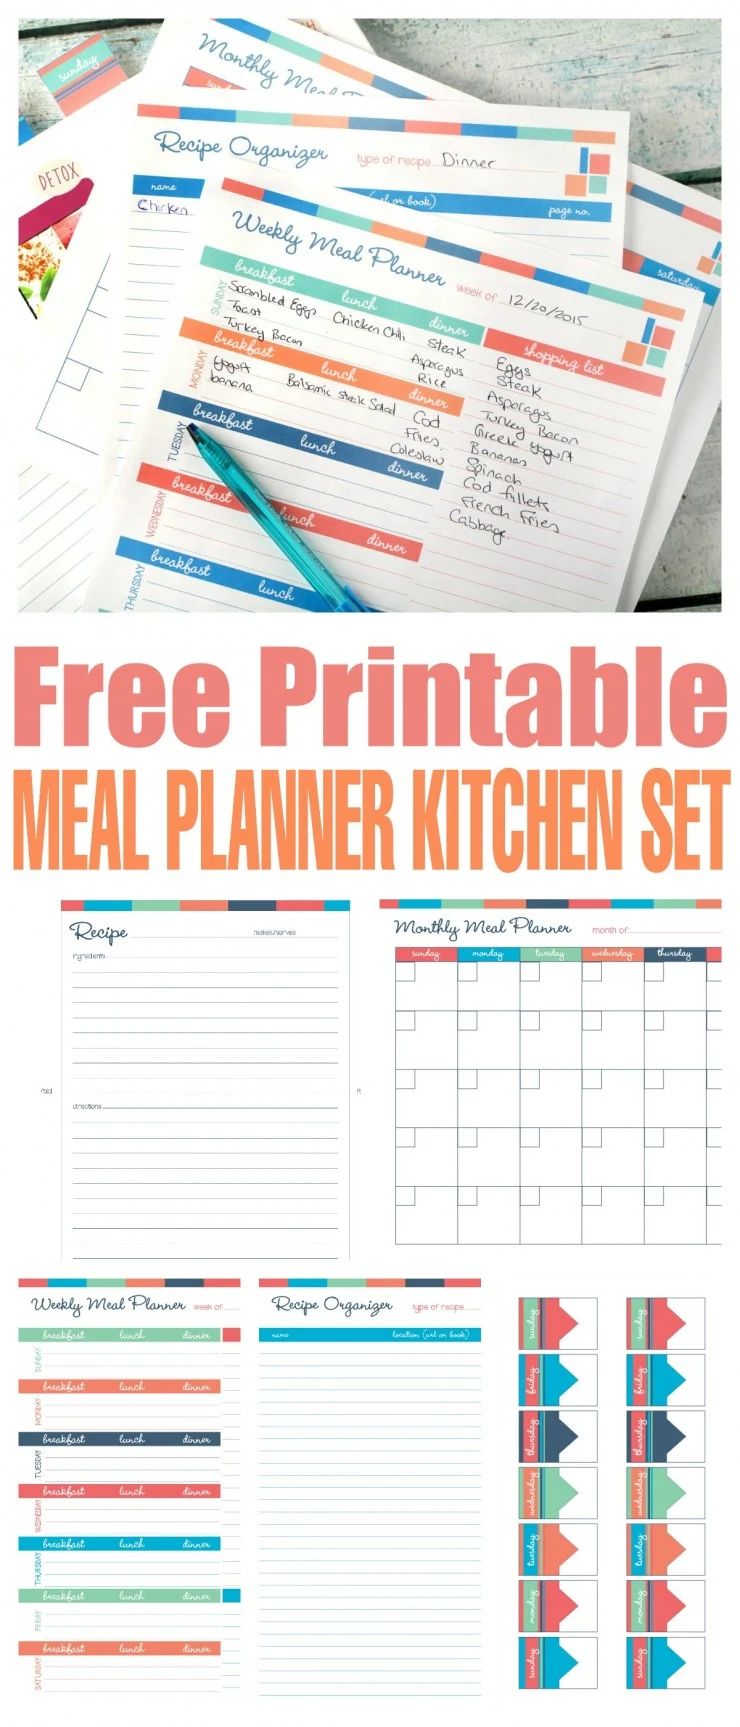 Free Printable Meal Planner Kitchen Set